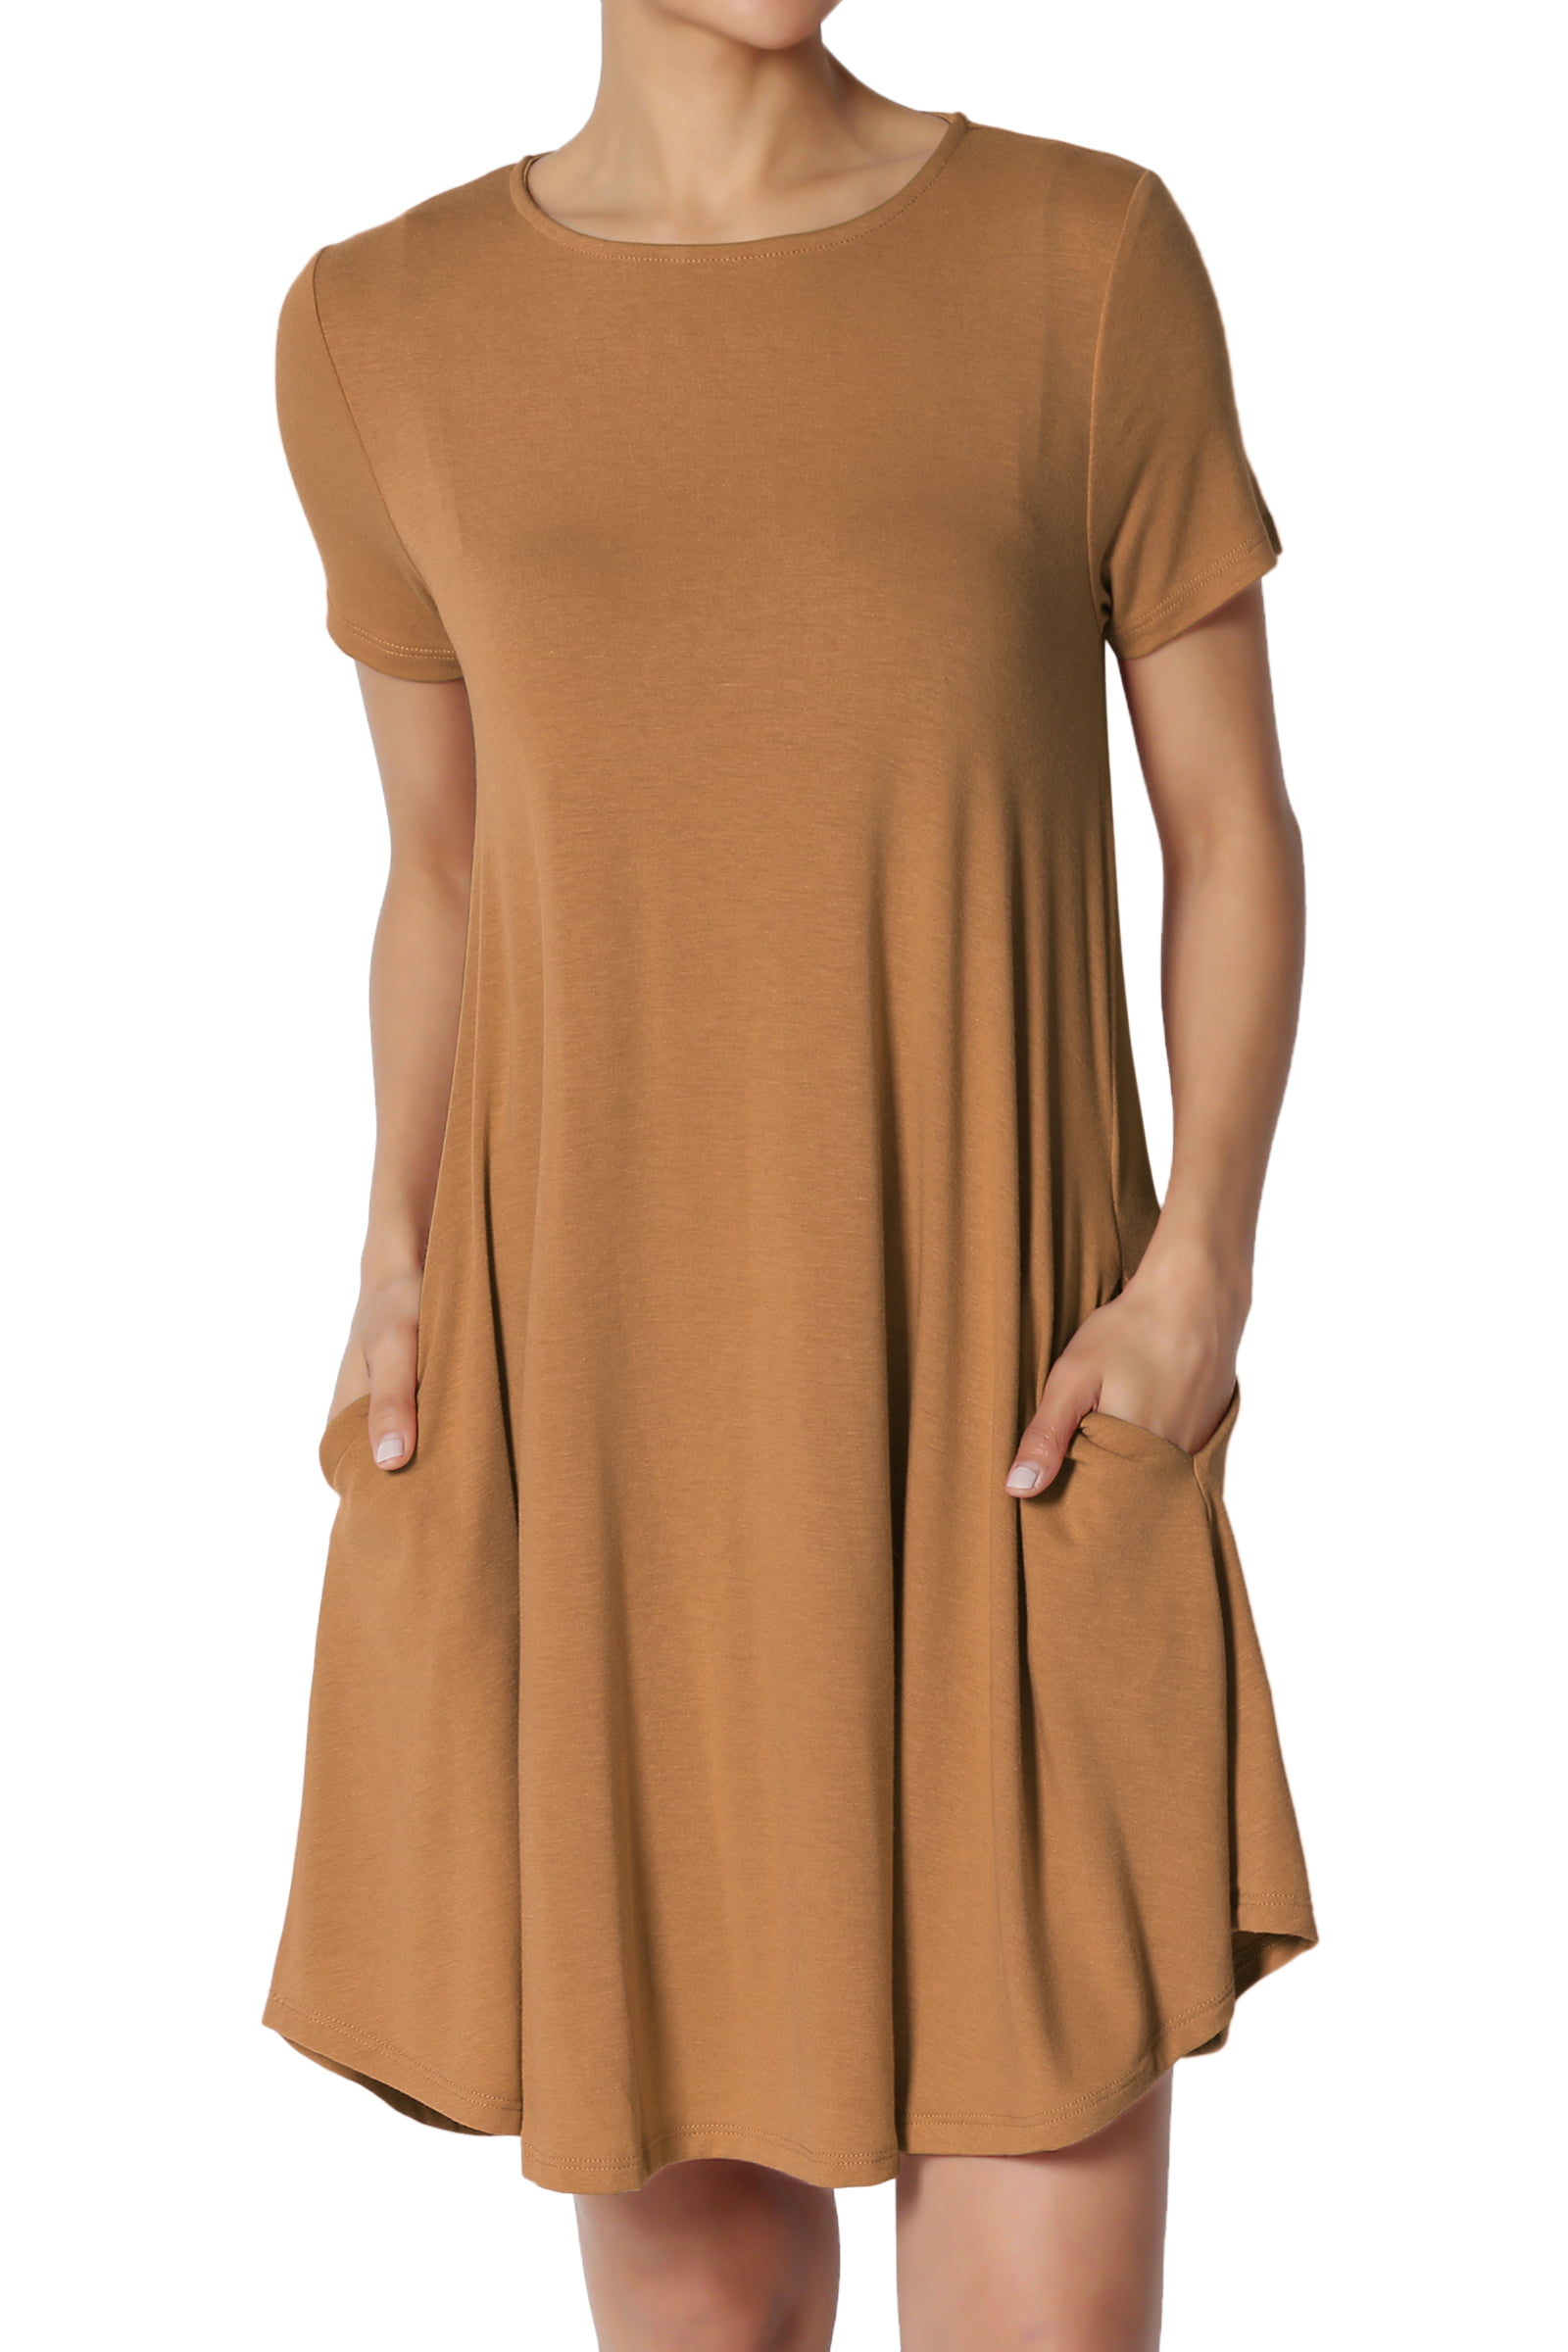 TheMogan S~3XL Basic Jersey Knit Short Sleeve Trapeze Pocket Loose T-Shirt Dress 